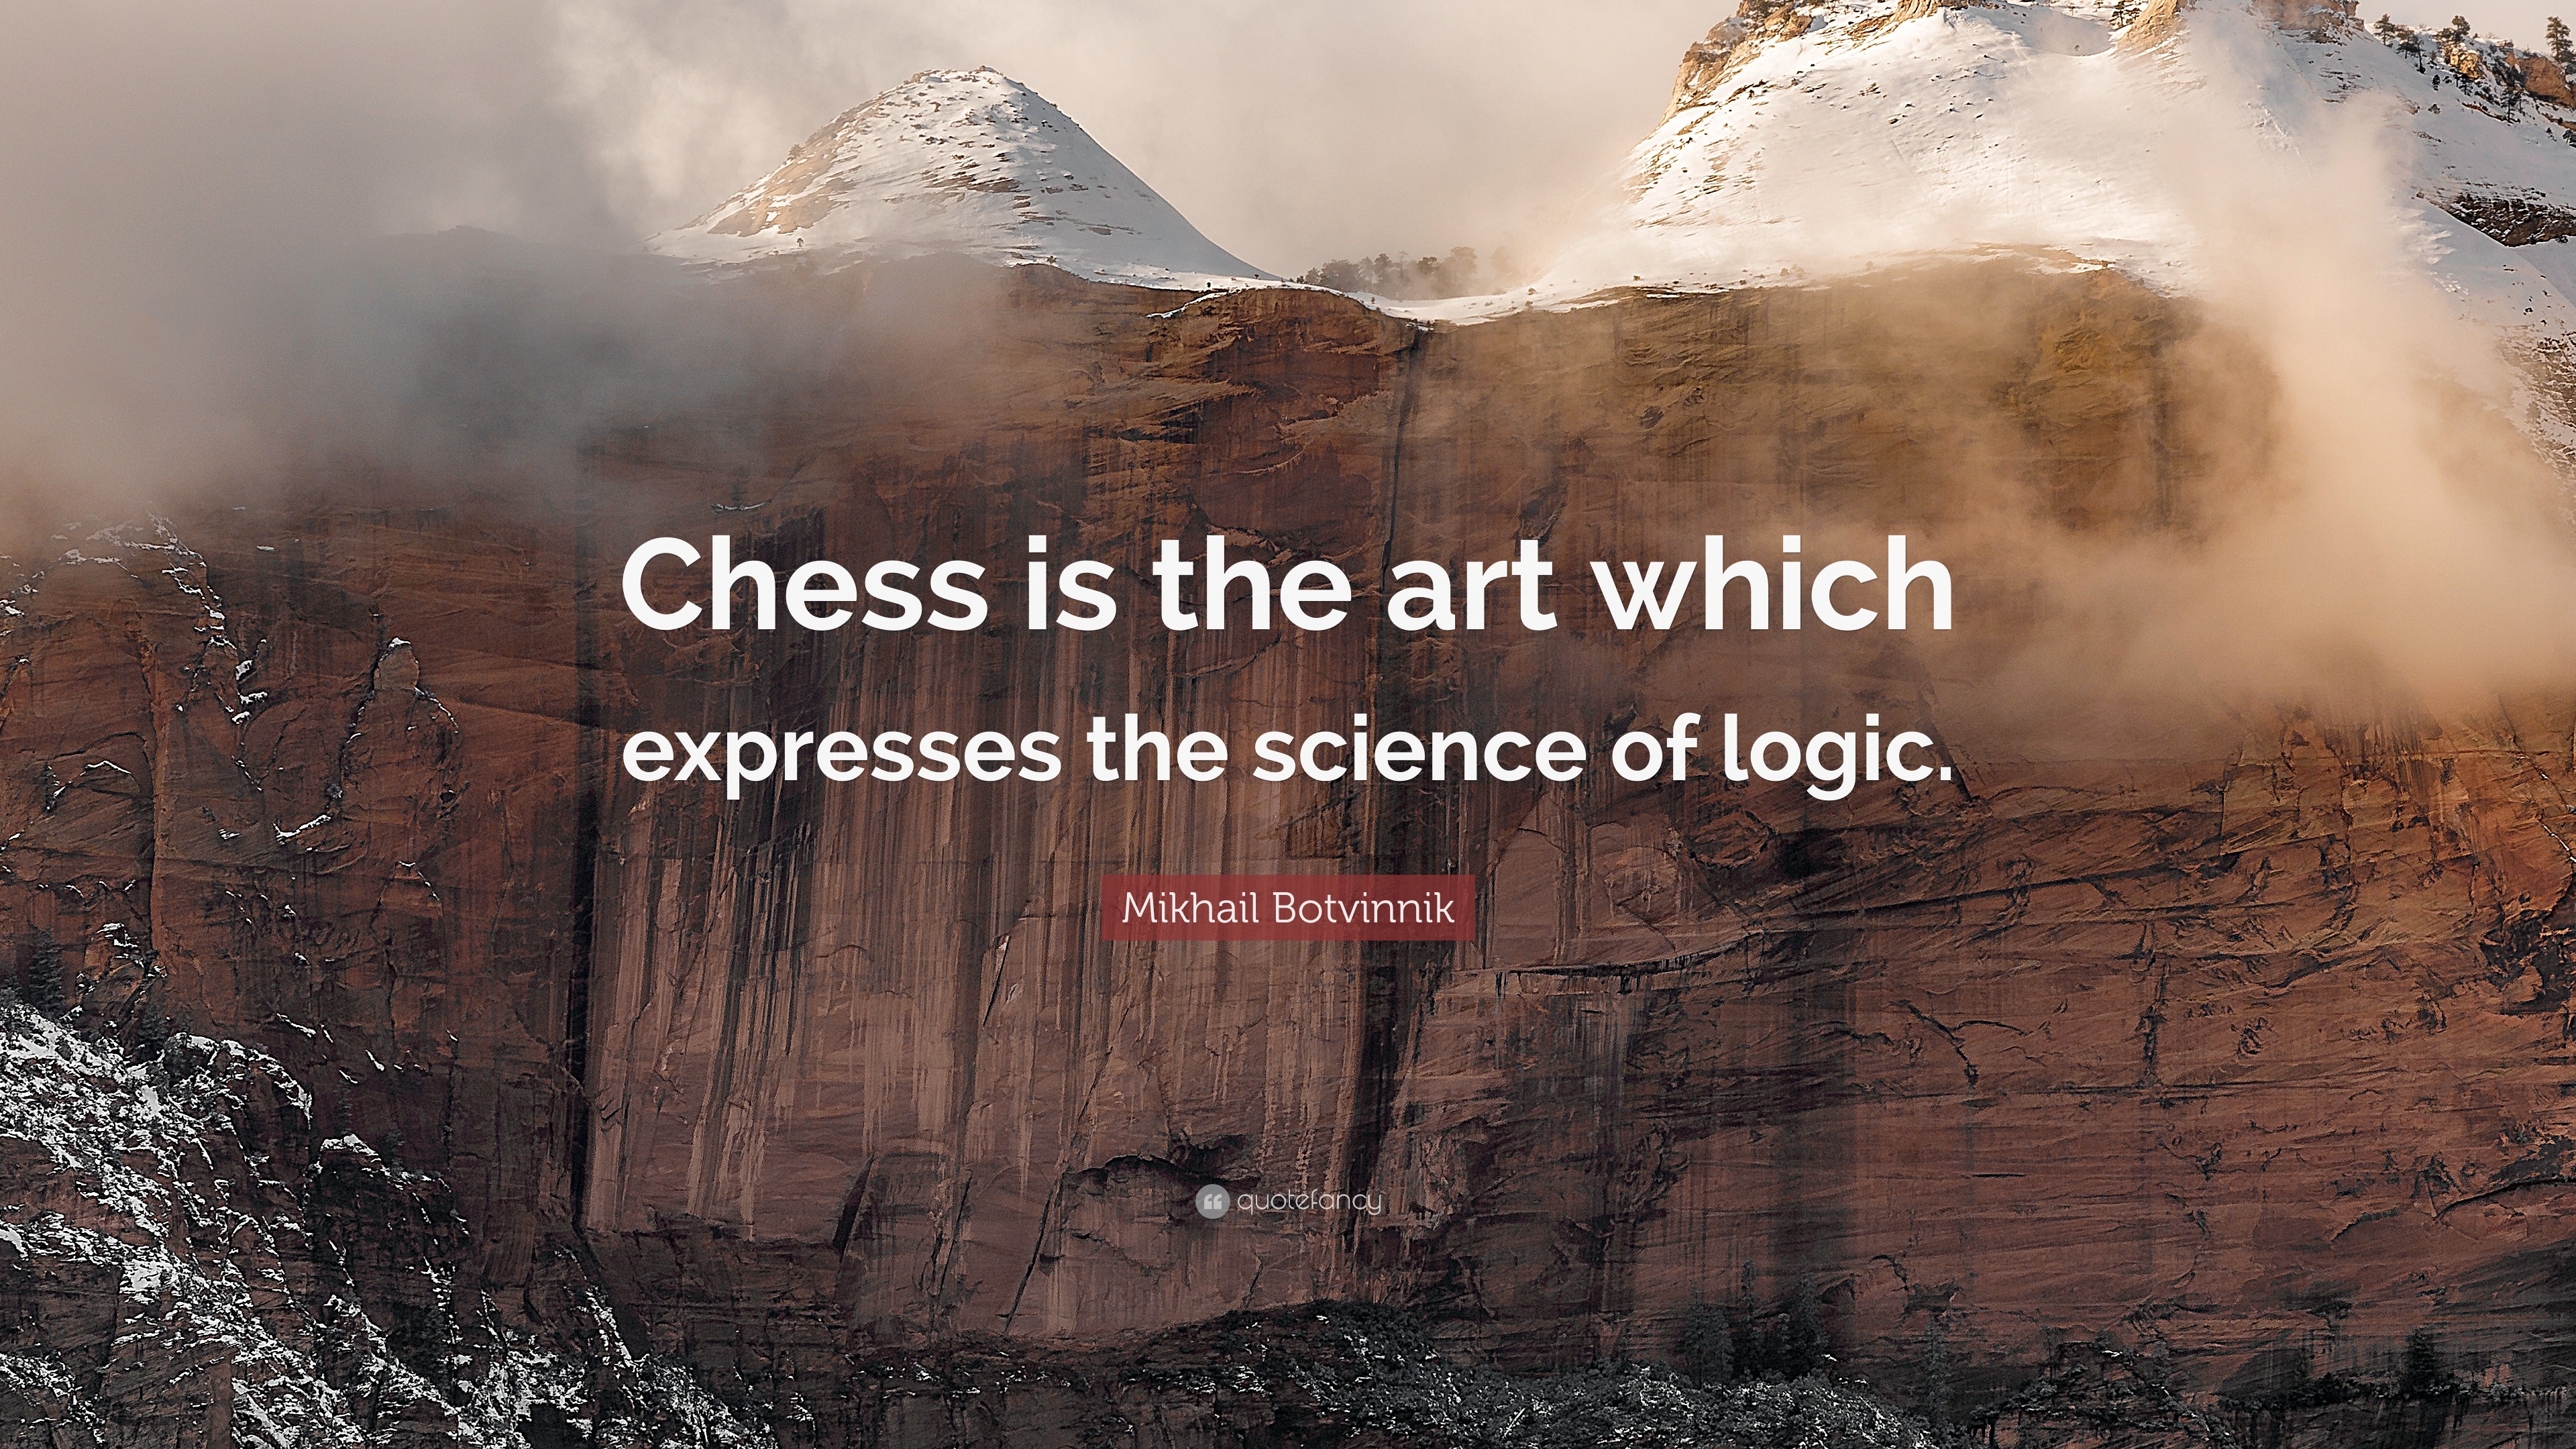 Mikhail Botvinnik Quotes (2022 Update)